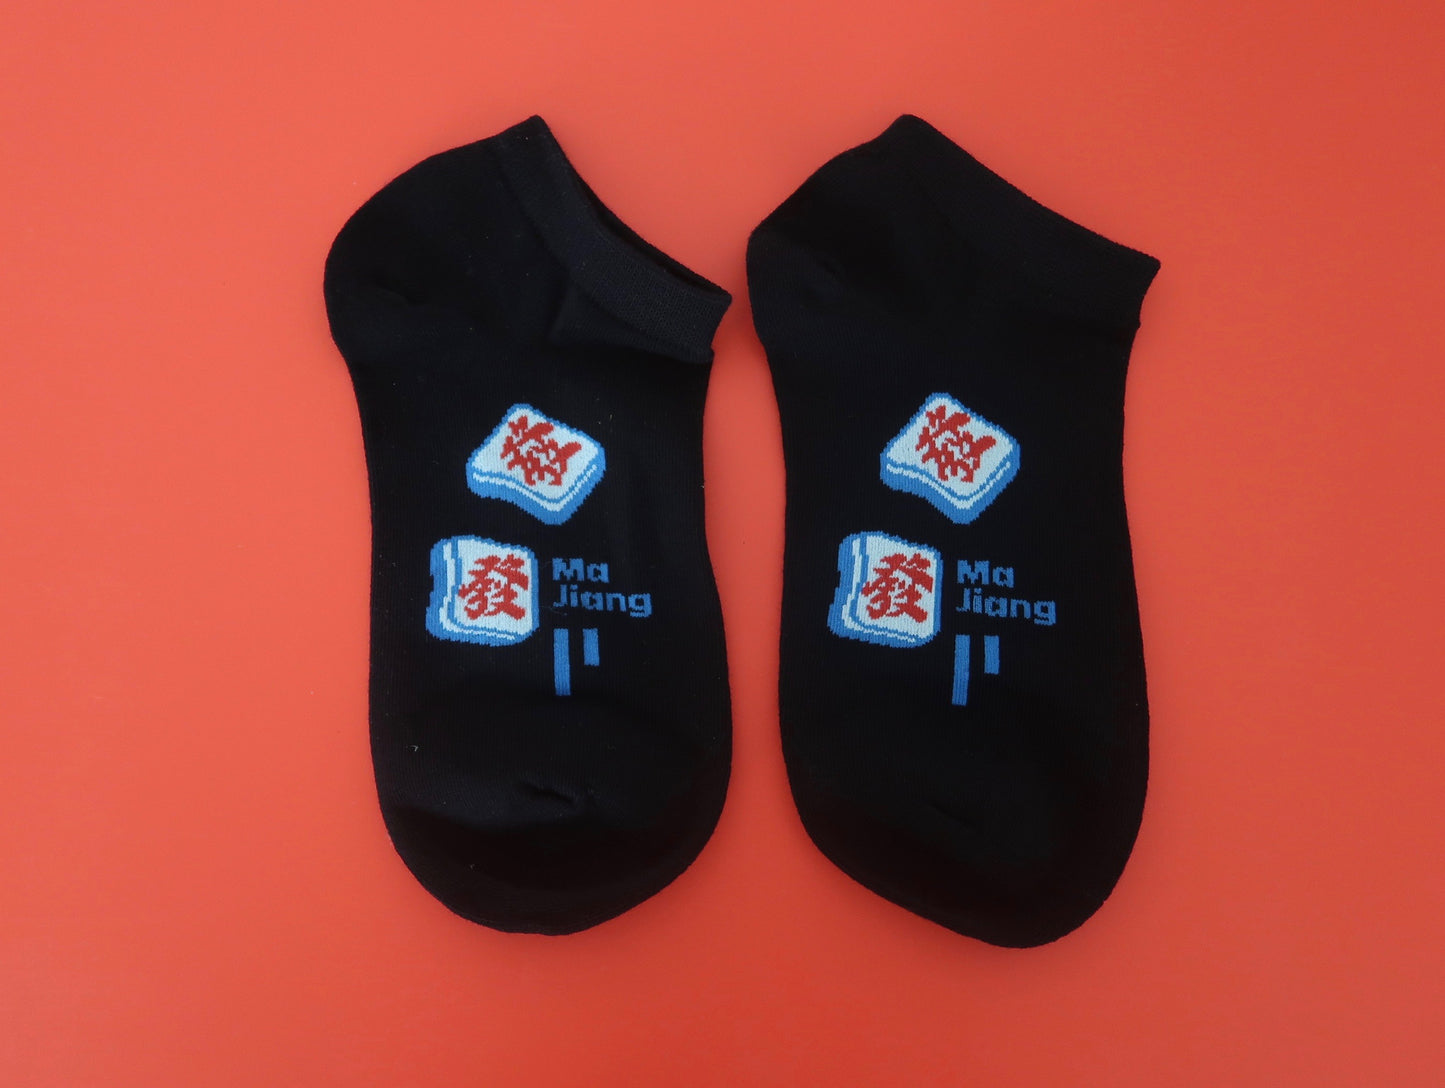 Ma Jiang Black Adult Socks